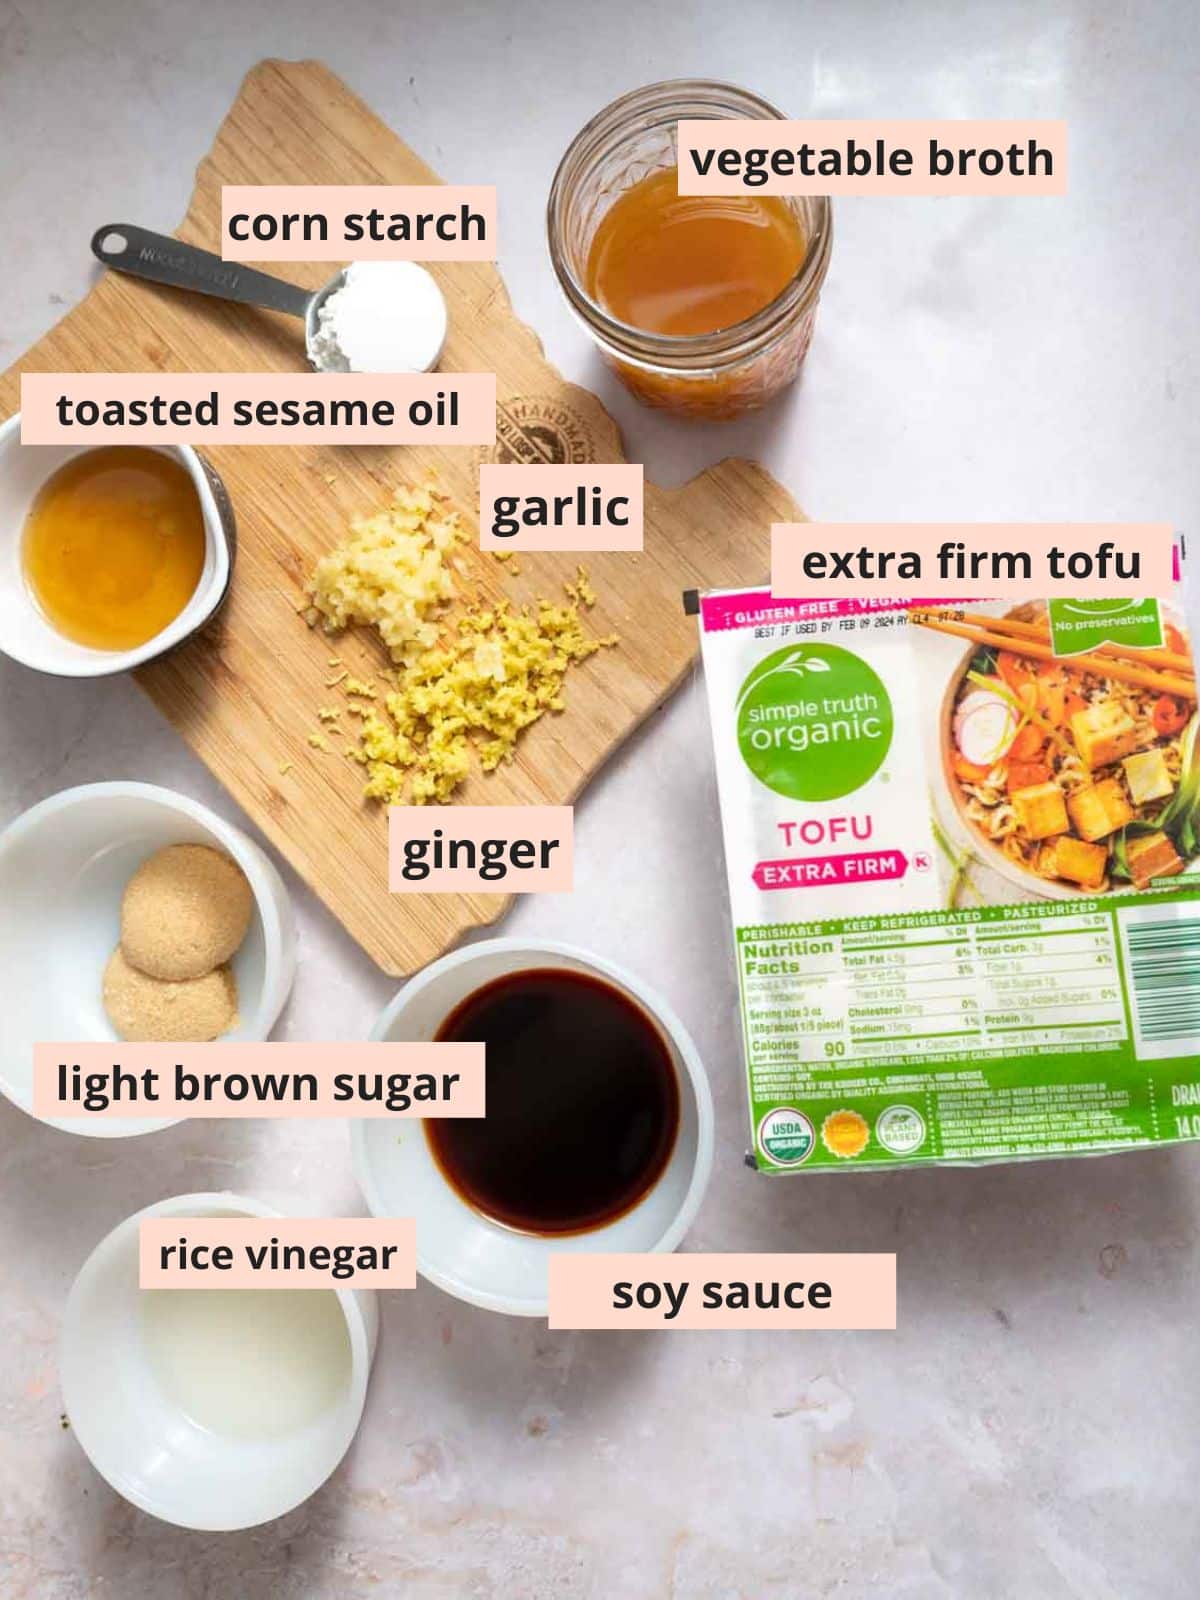 Labeled ingredients used to make sesame tofu.